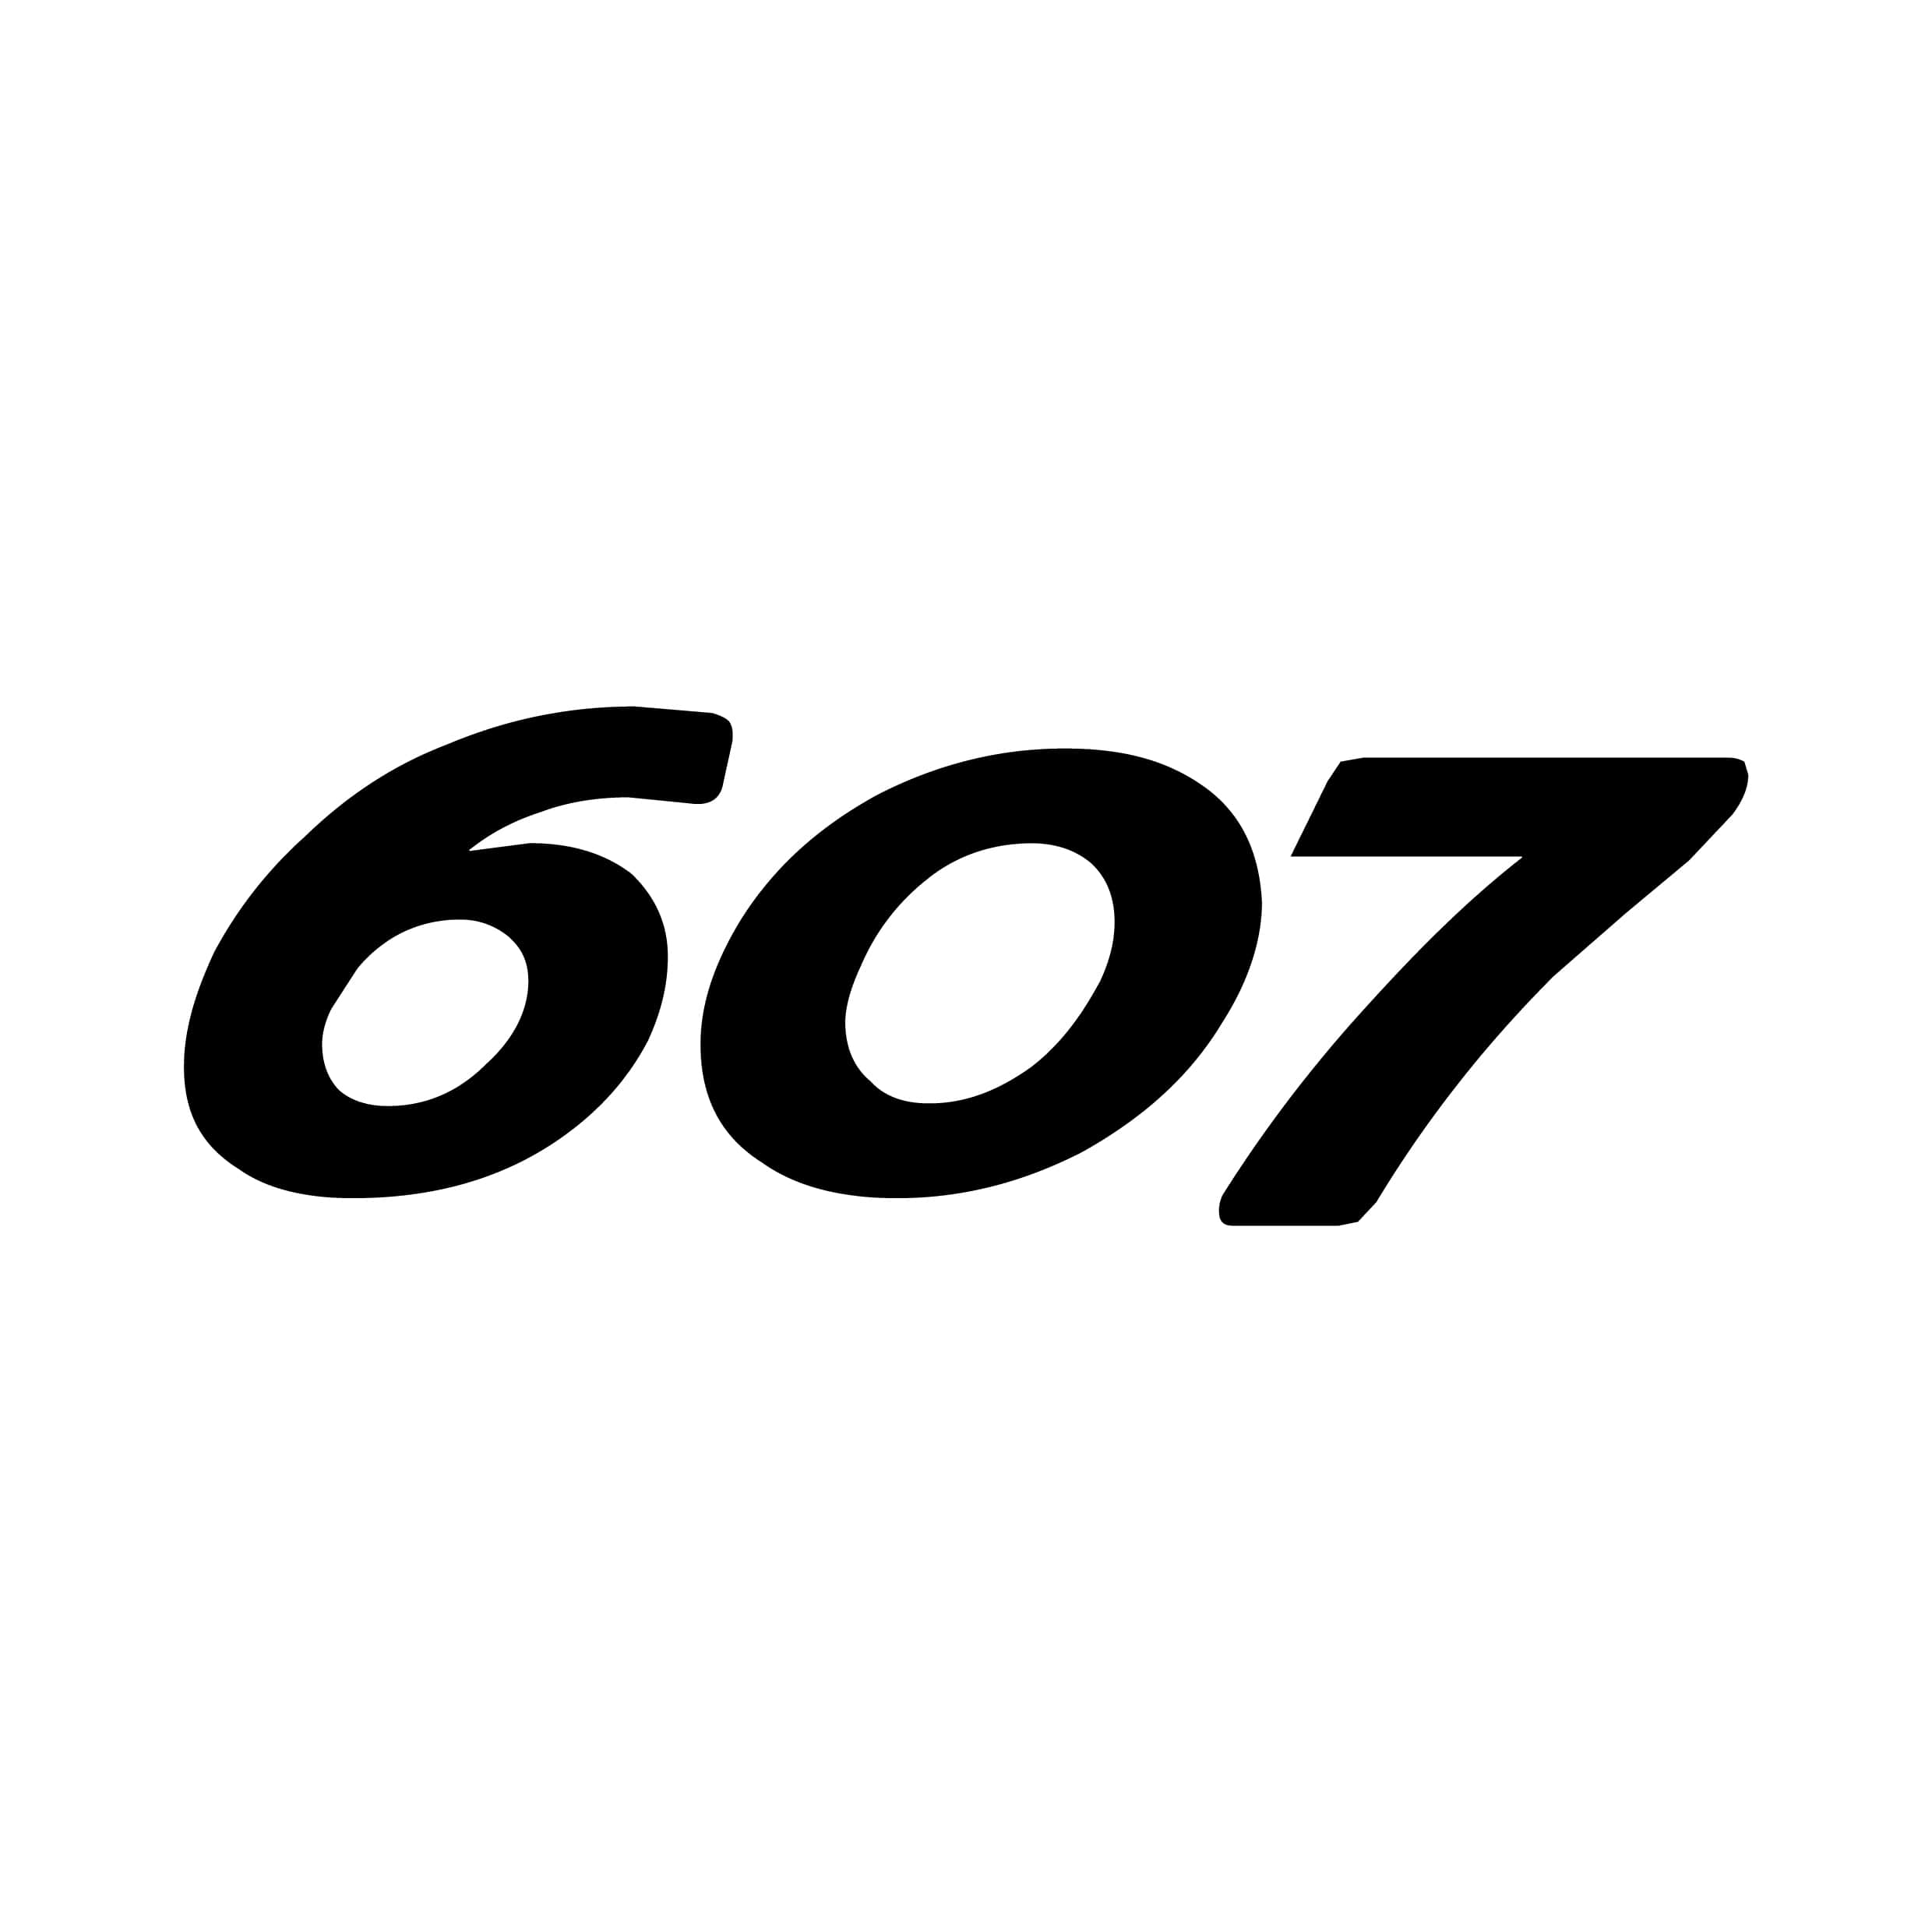 stickers-peugeot-607-ref46-autocollant-voiture-sticker-auto-autocollants-decals-sponsors-racing-tuning-sport-logo-min